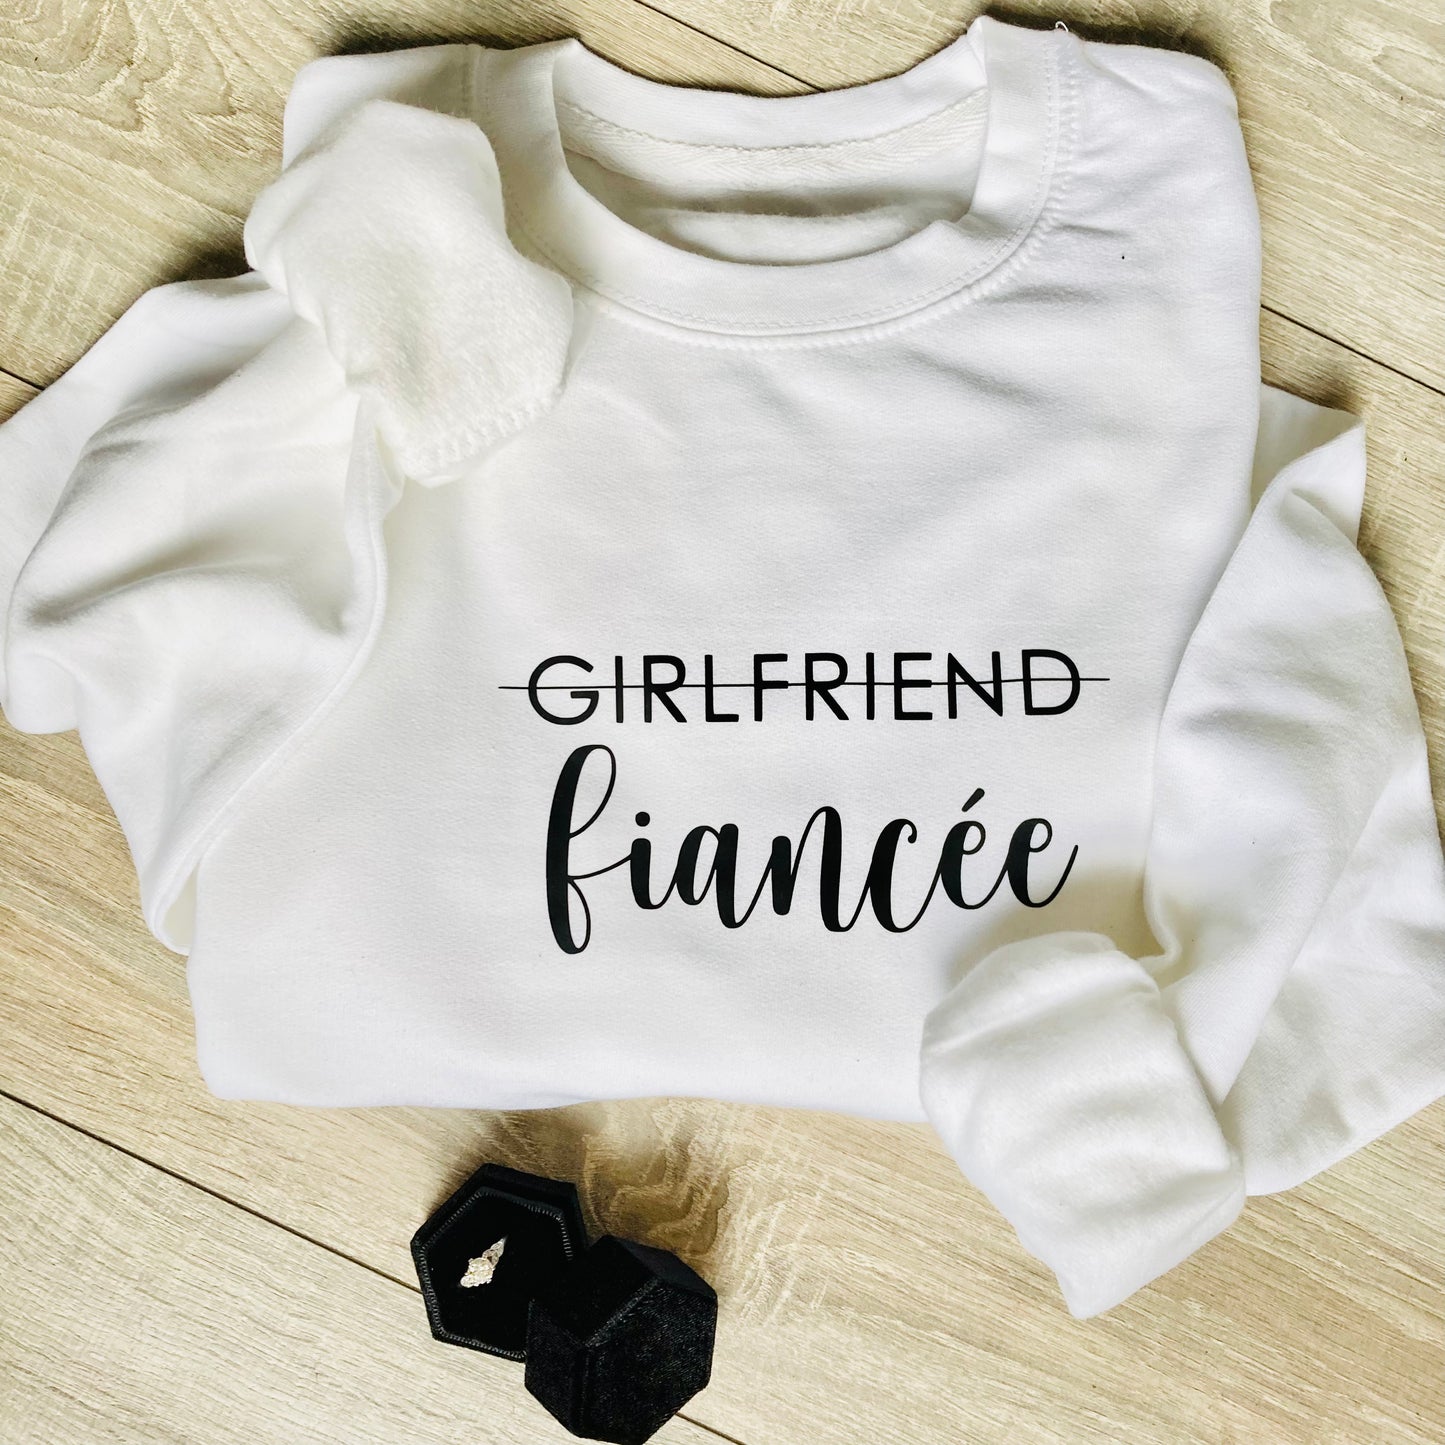 Girlfriend to Fiancée Jumper